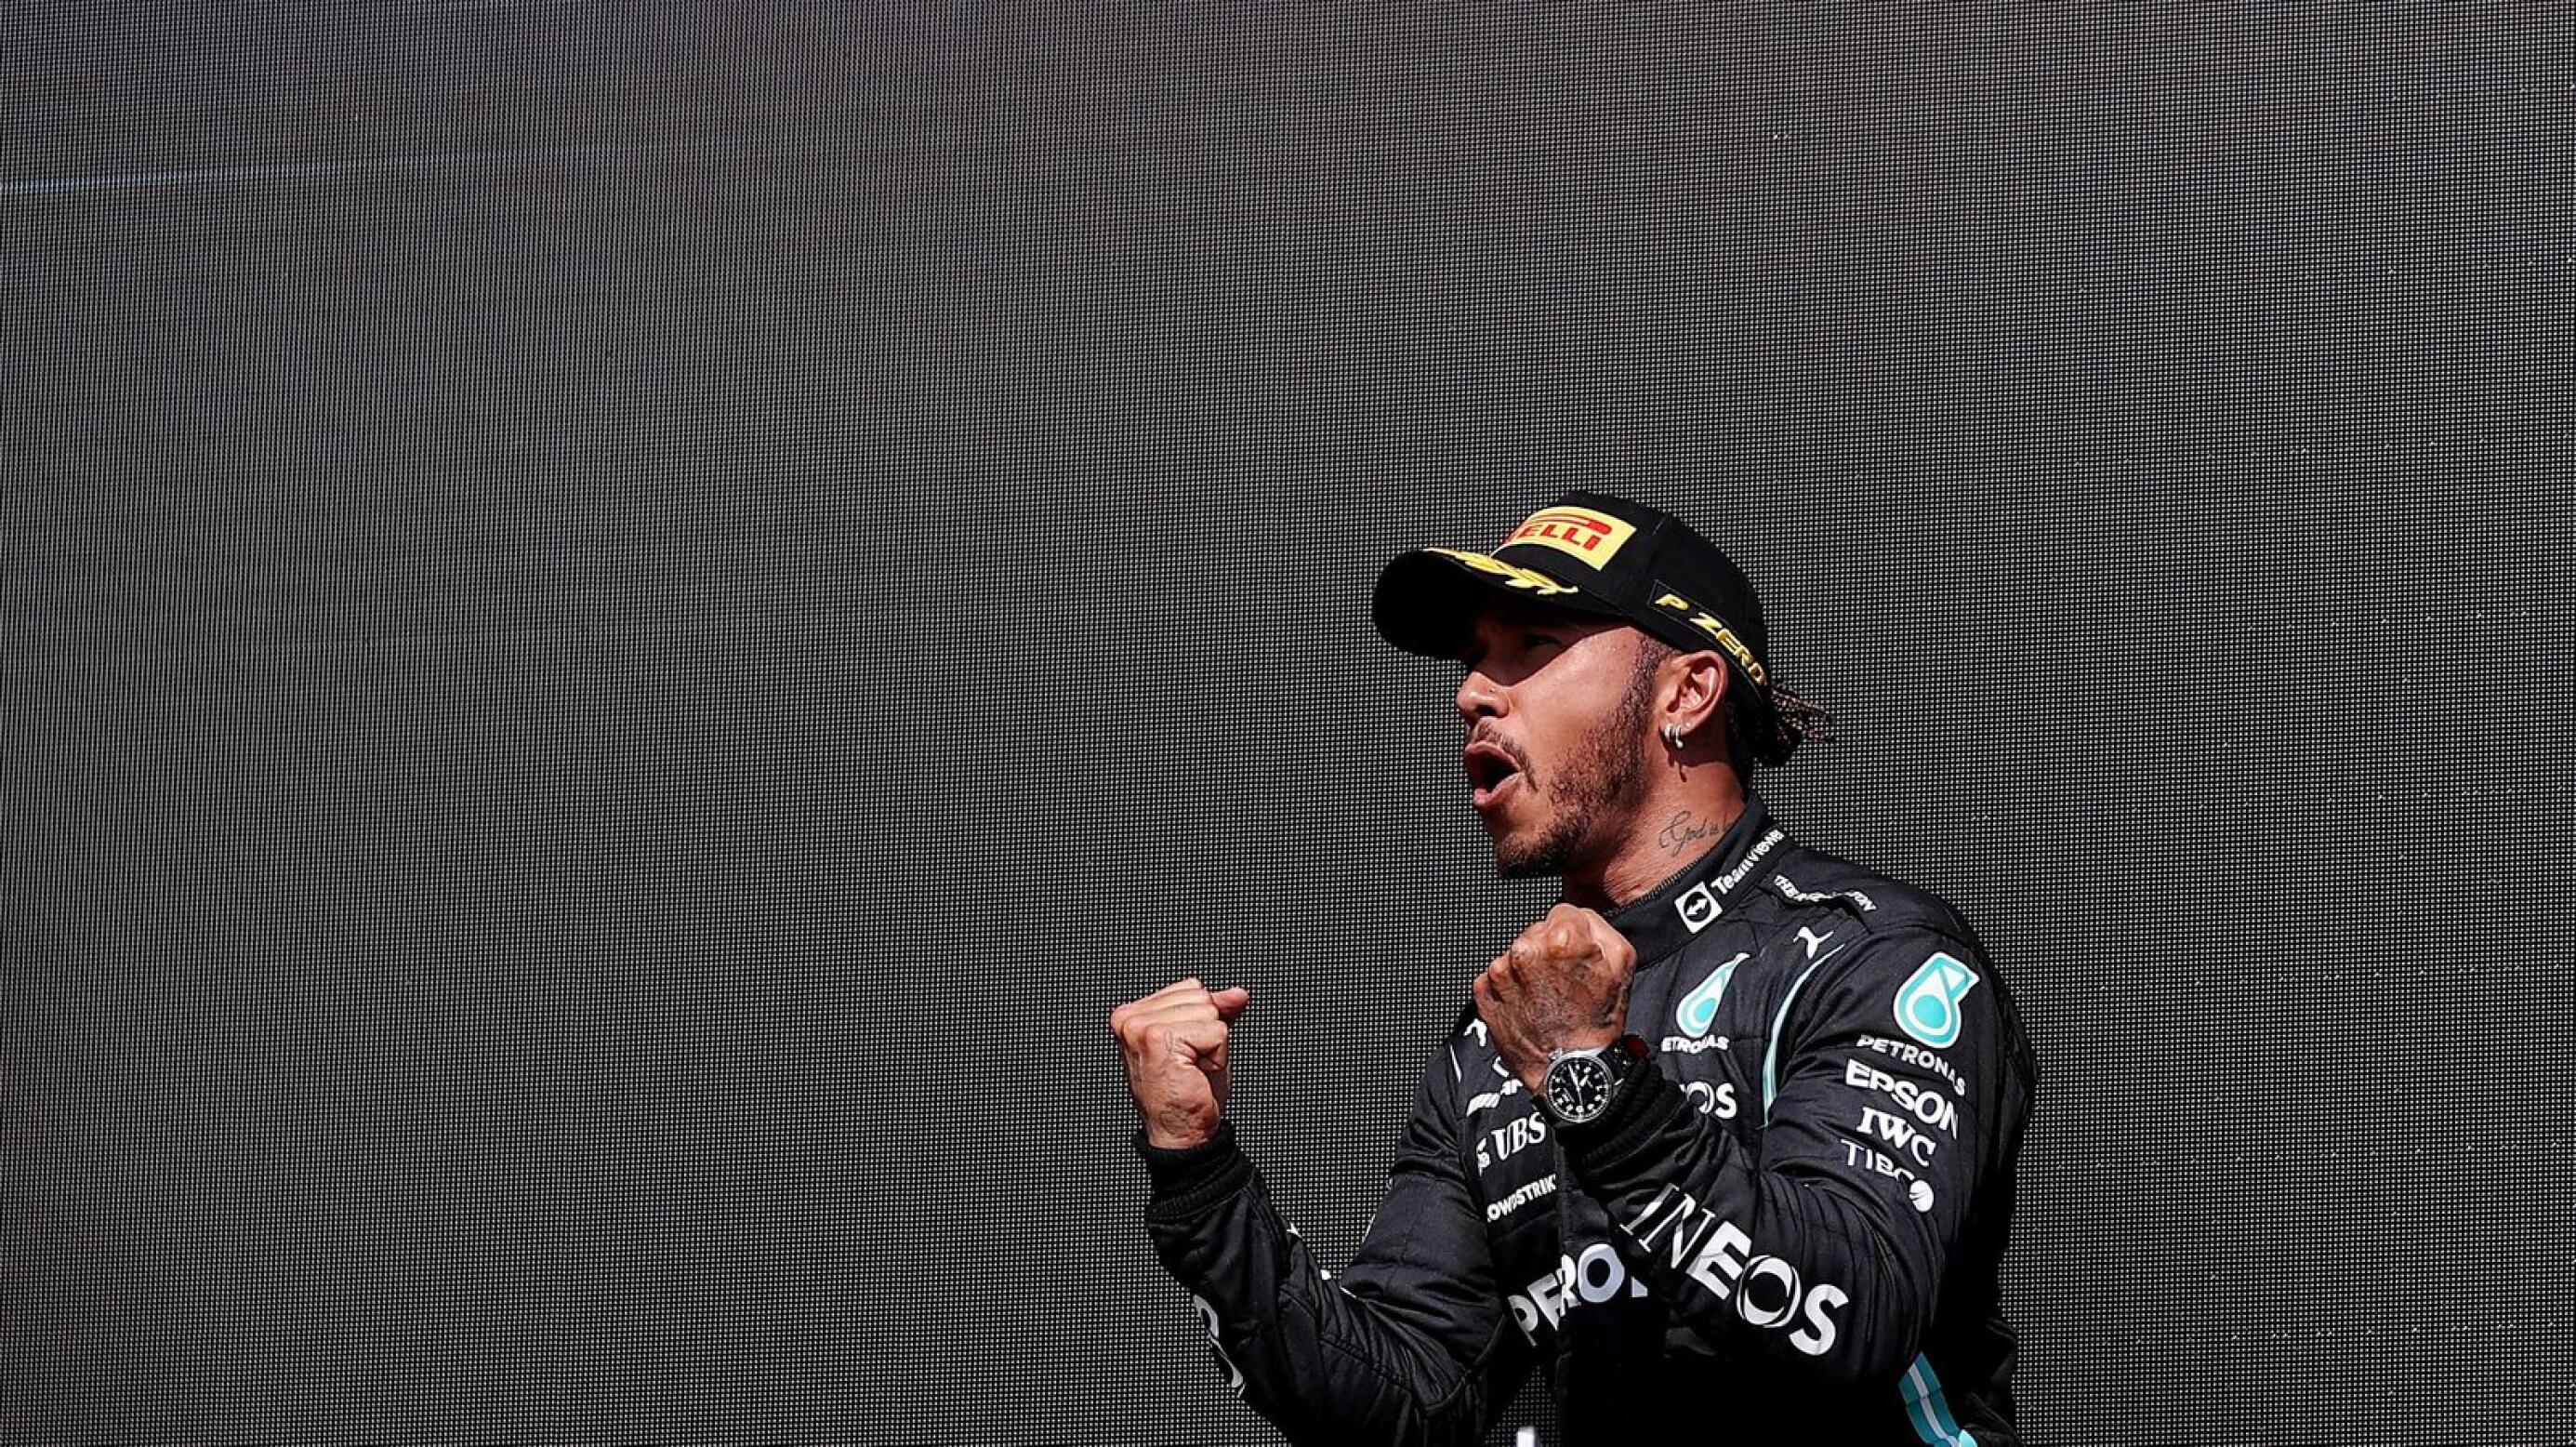 Mercedes' Lewis Hamilton celebrates on the podium after winning the British Grand Prix on Sunday